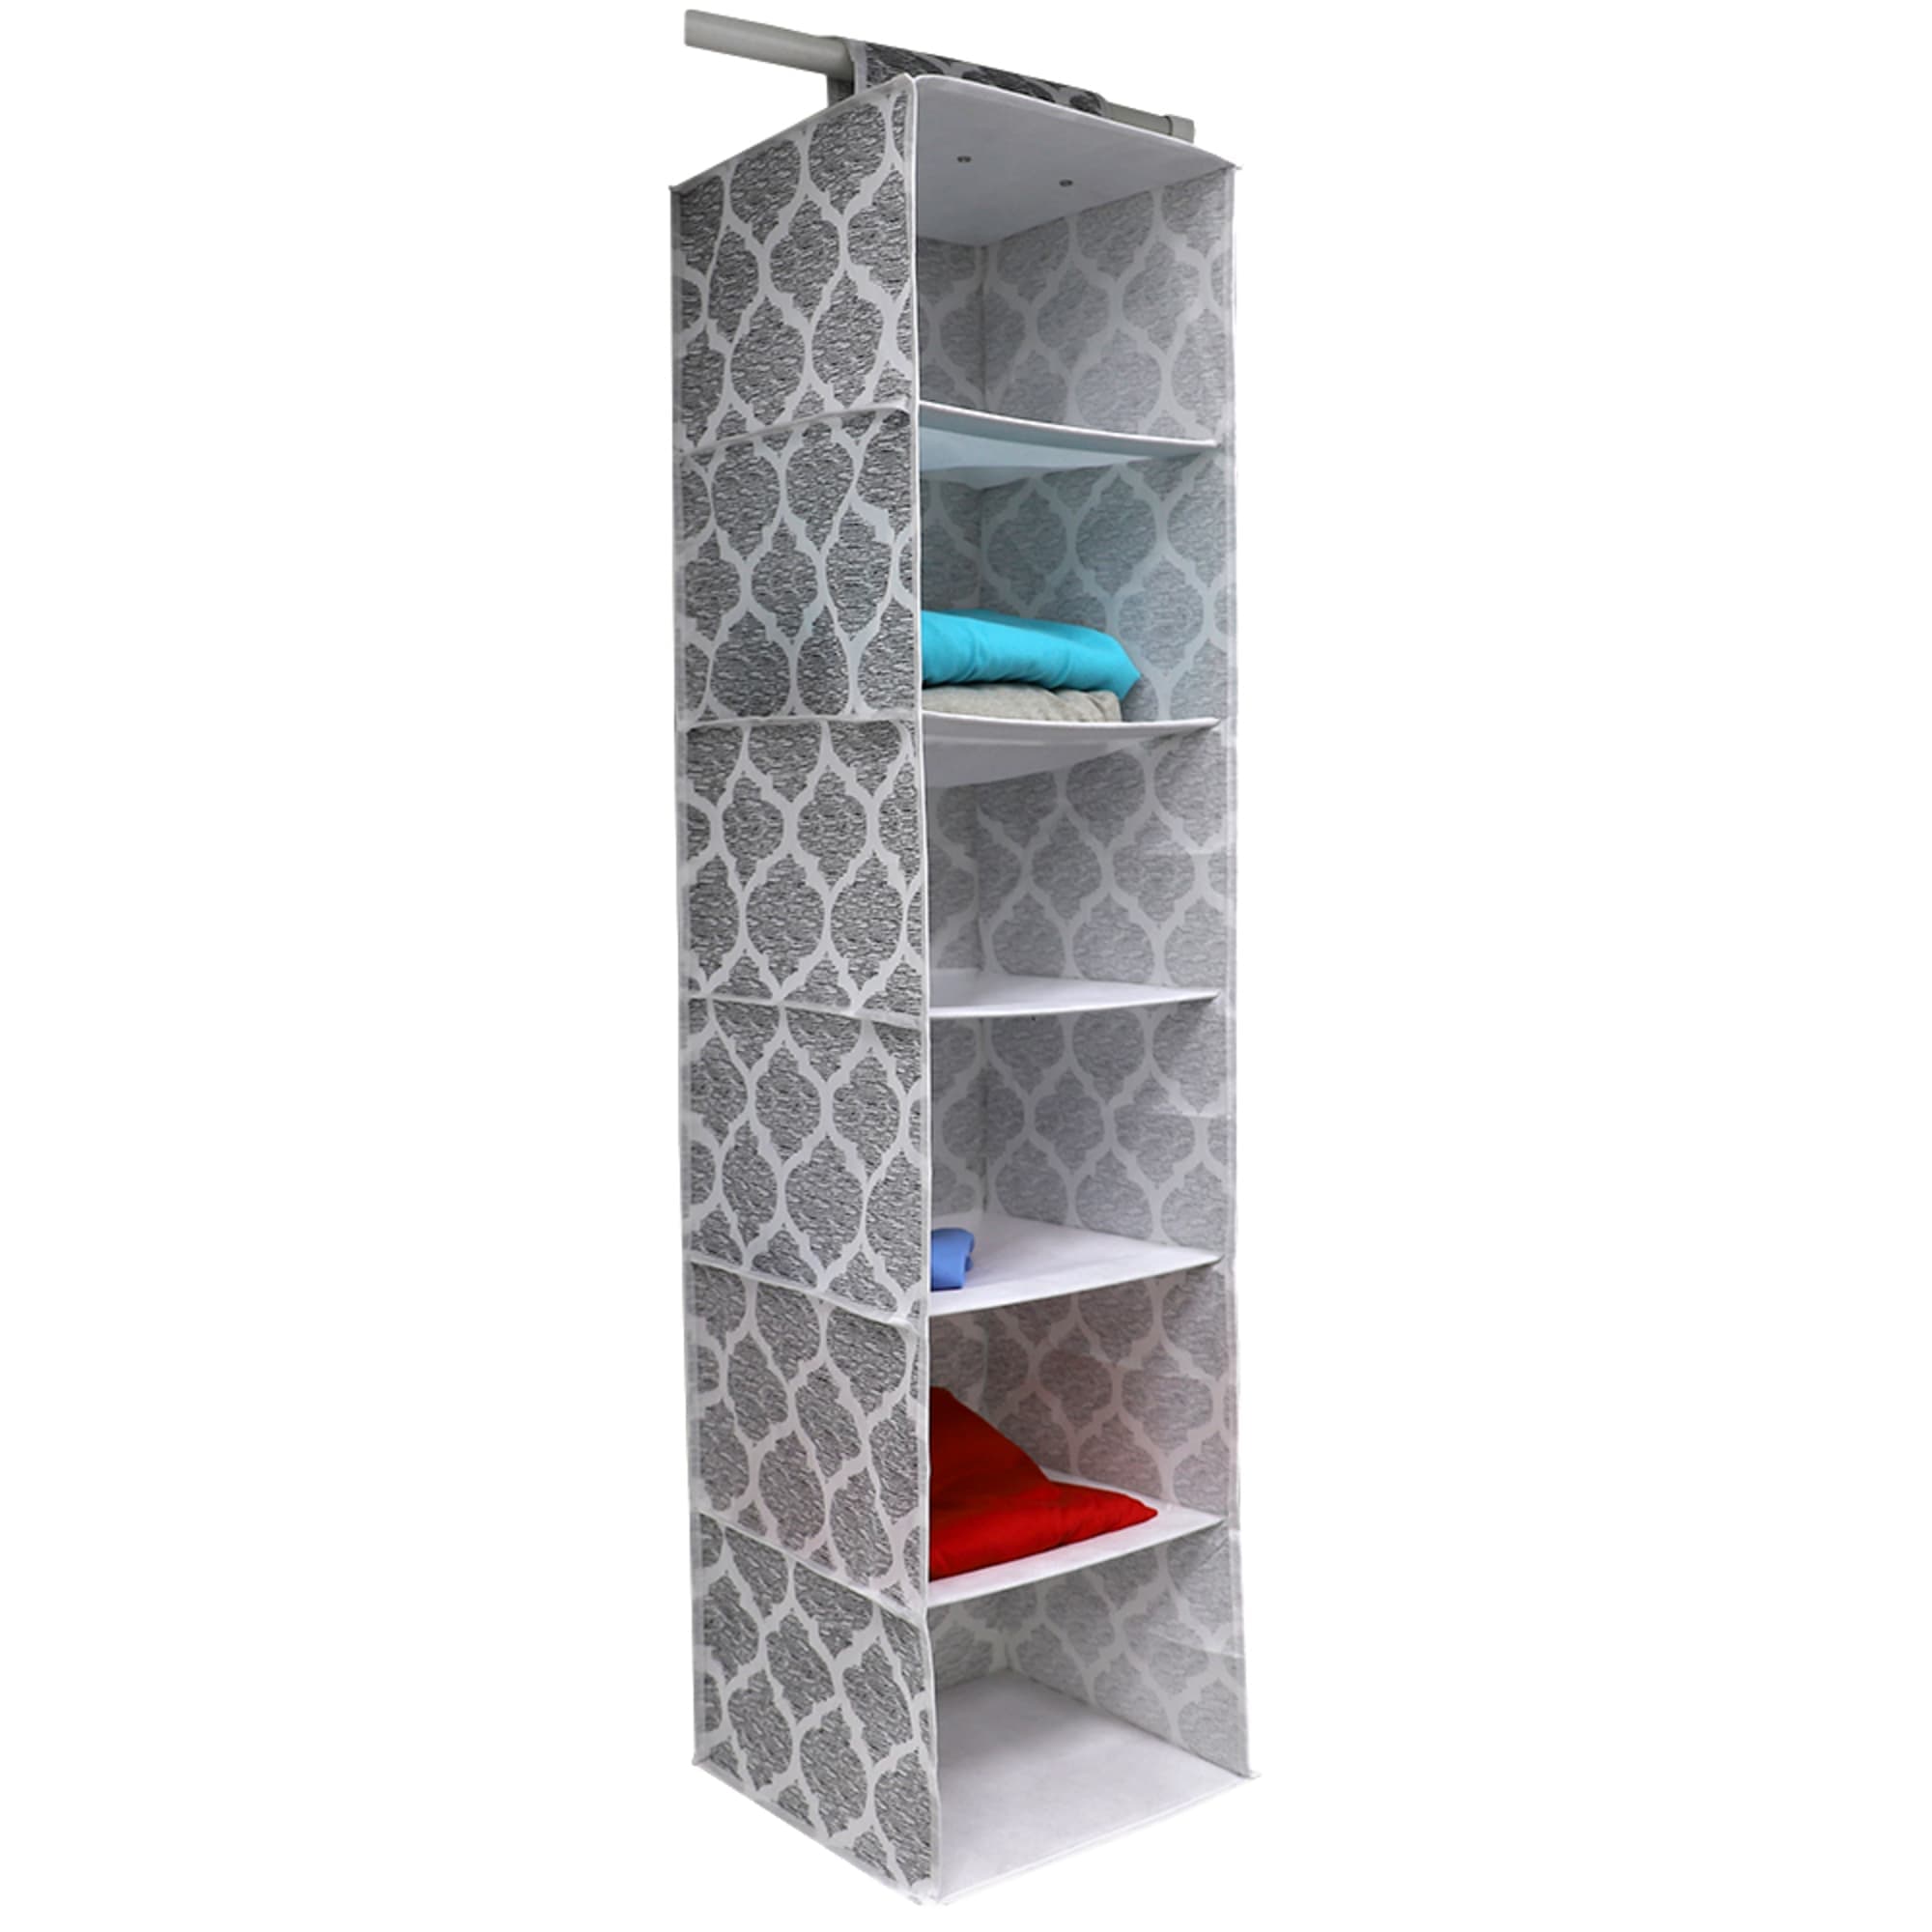 Home Basics Arabesque 6 Shelf Non-woven Hanging Closet Organizer, Grey $5.00 EACH, CASE PACK OF 12